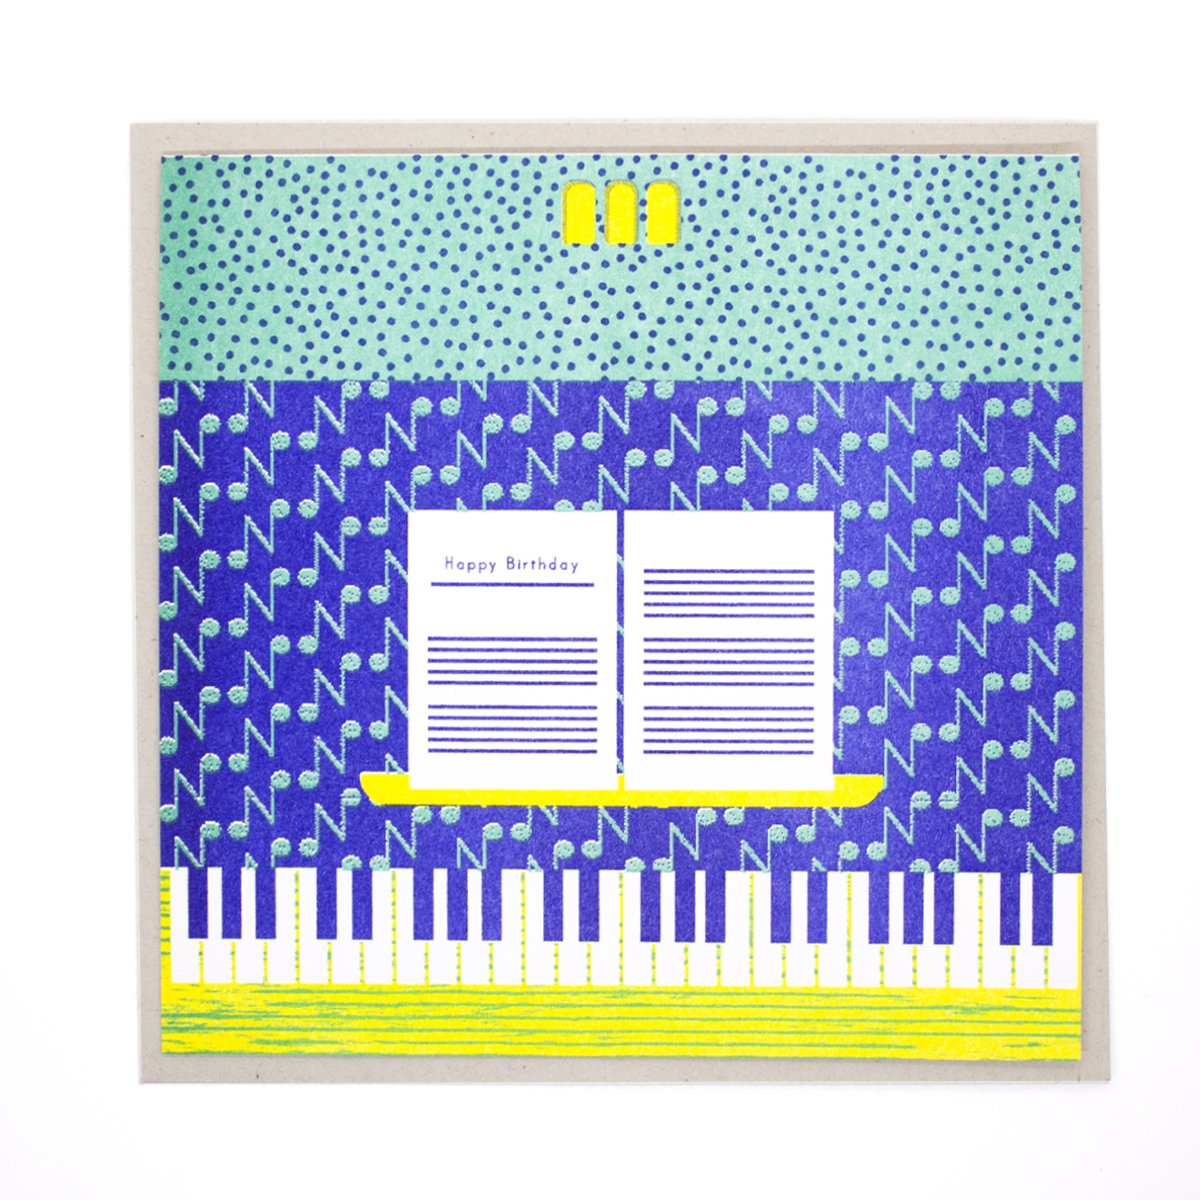 Bomull Press Birthday Card - Origami Piano B